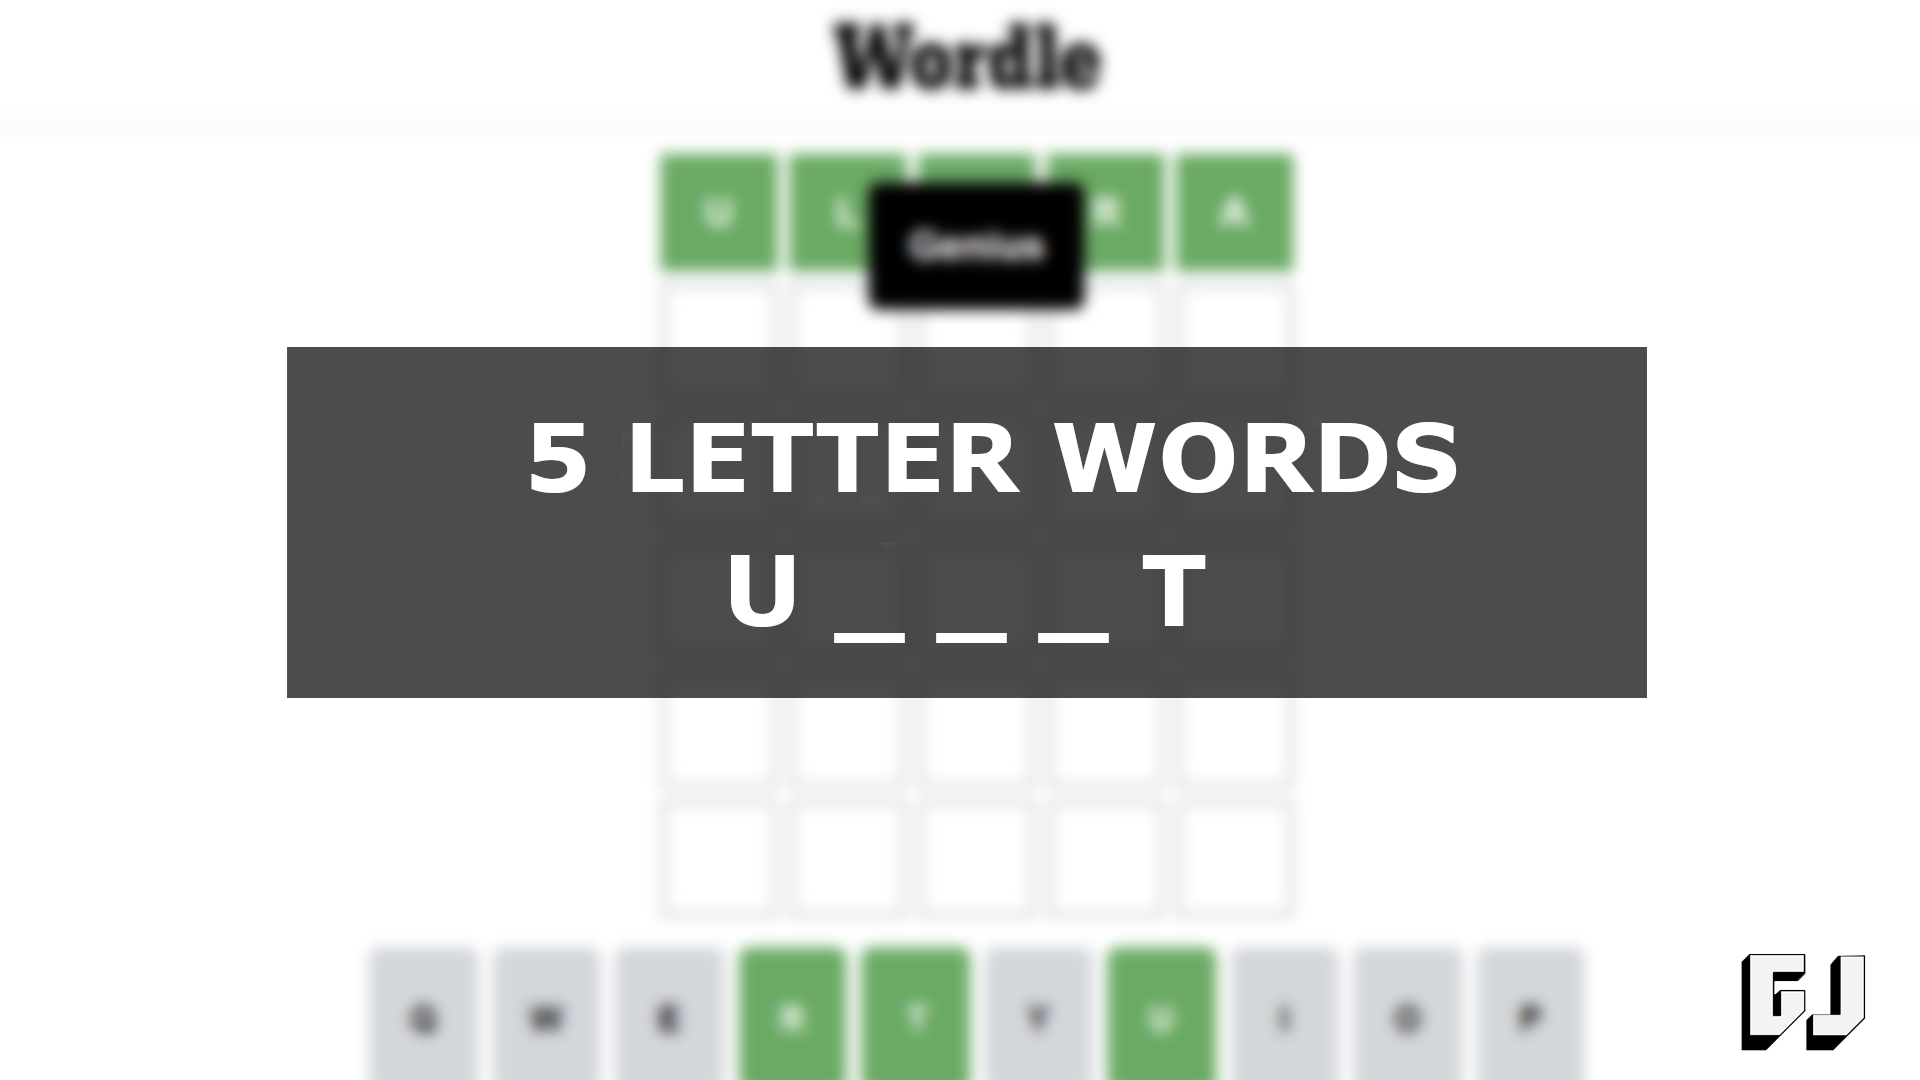 Слово 5 букв начинается на кон. Игра 5 букв тинькофф. Слова в тинькофф игра. 5 Letter Words. Слова из пяти букв игра в тинькофф.